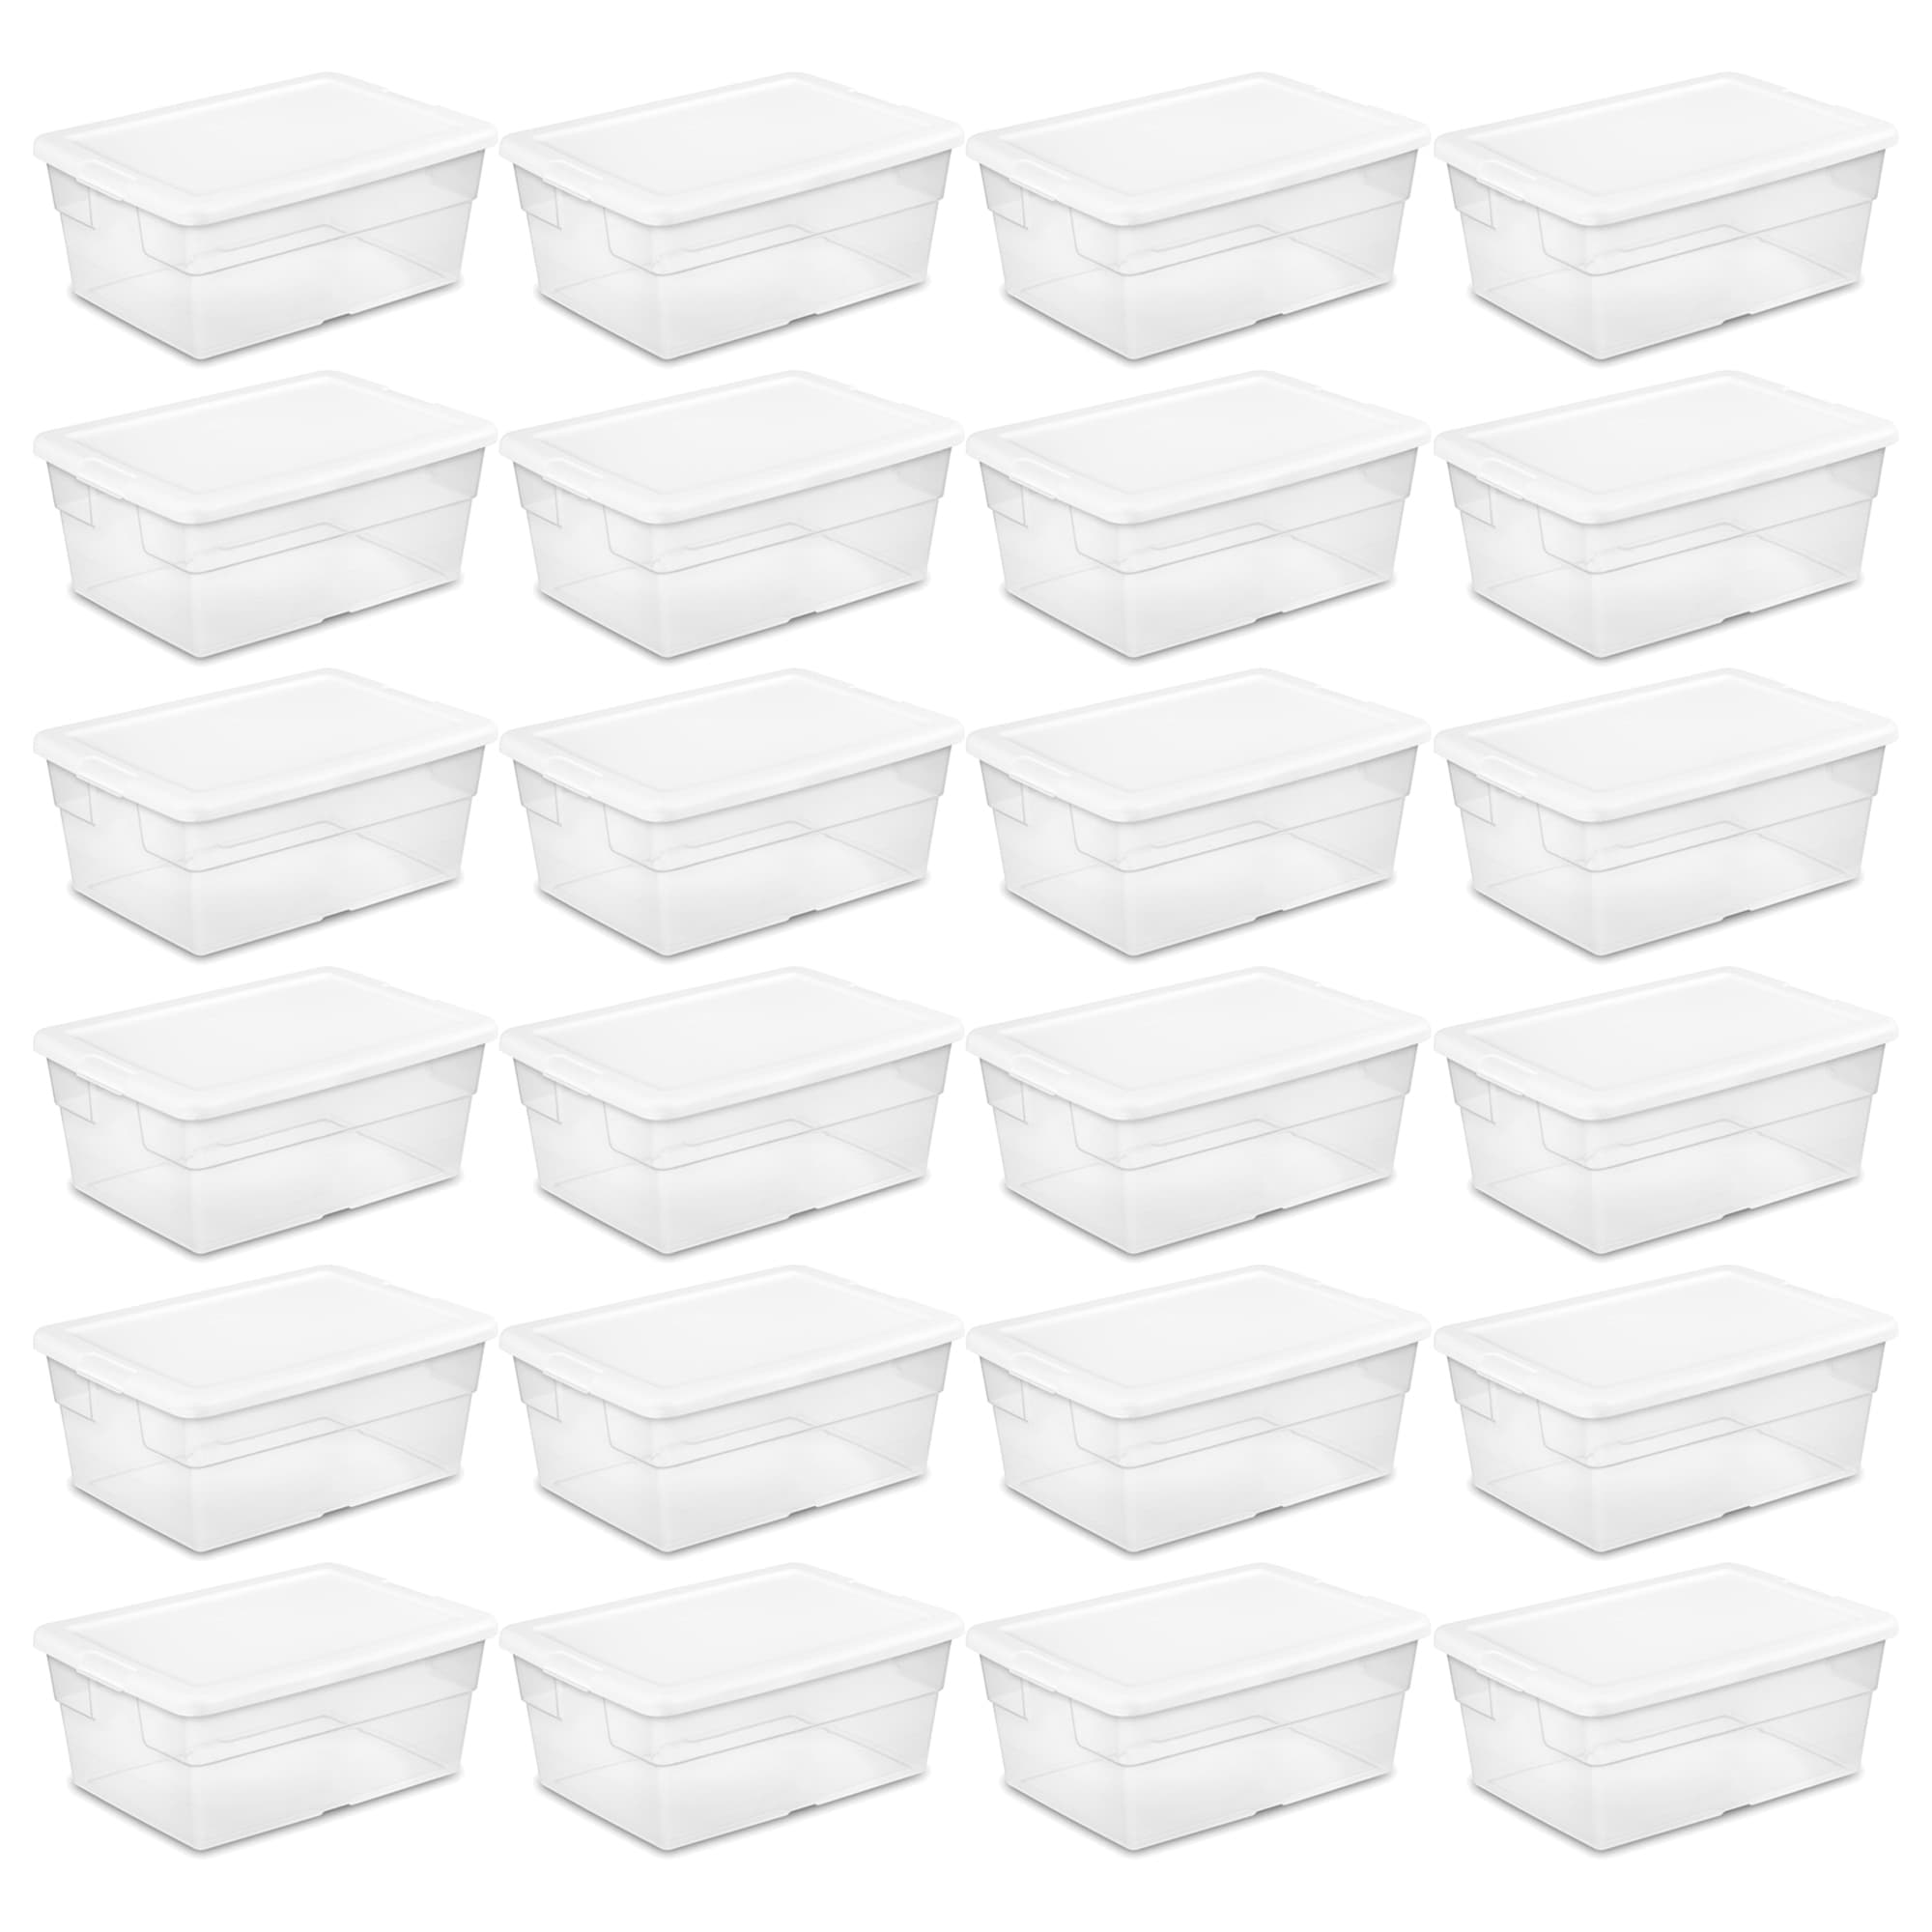 Sterilite 16448012 16 Quart/15 Liter Storage Box White Lid with Clear Base 12-Pack